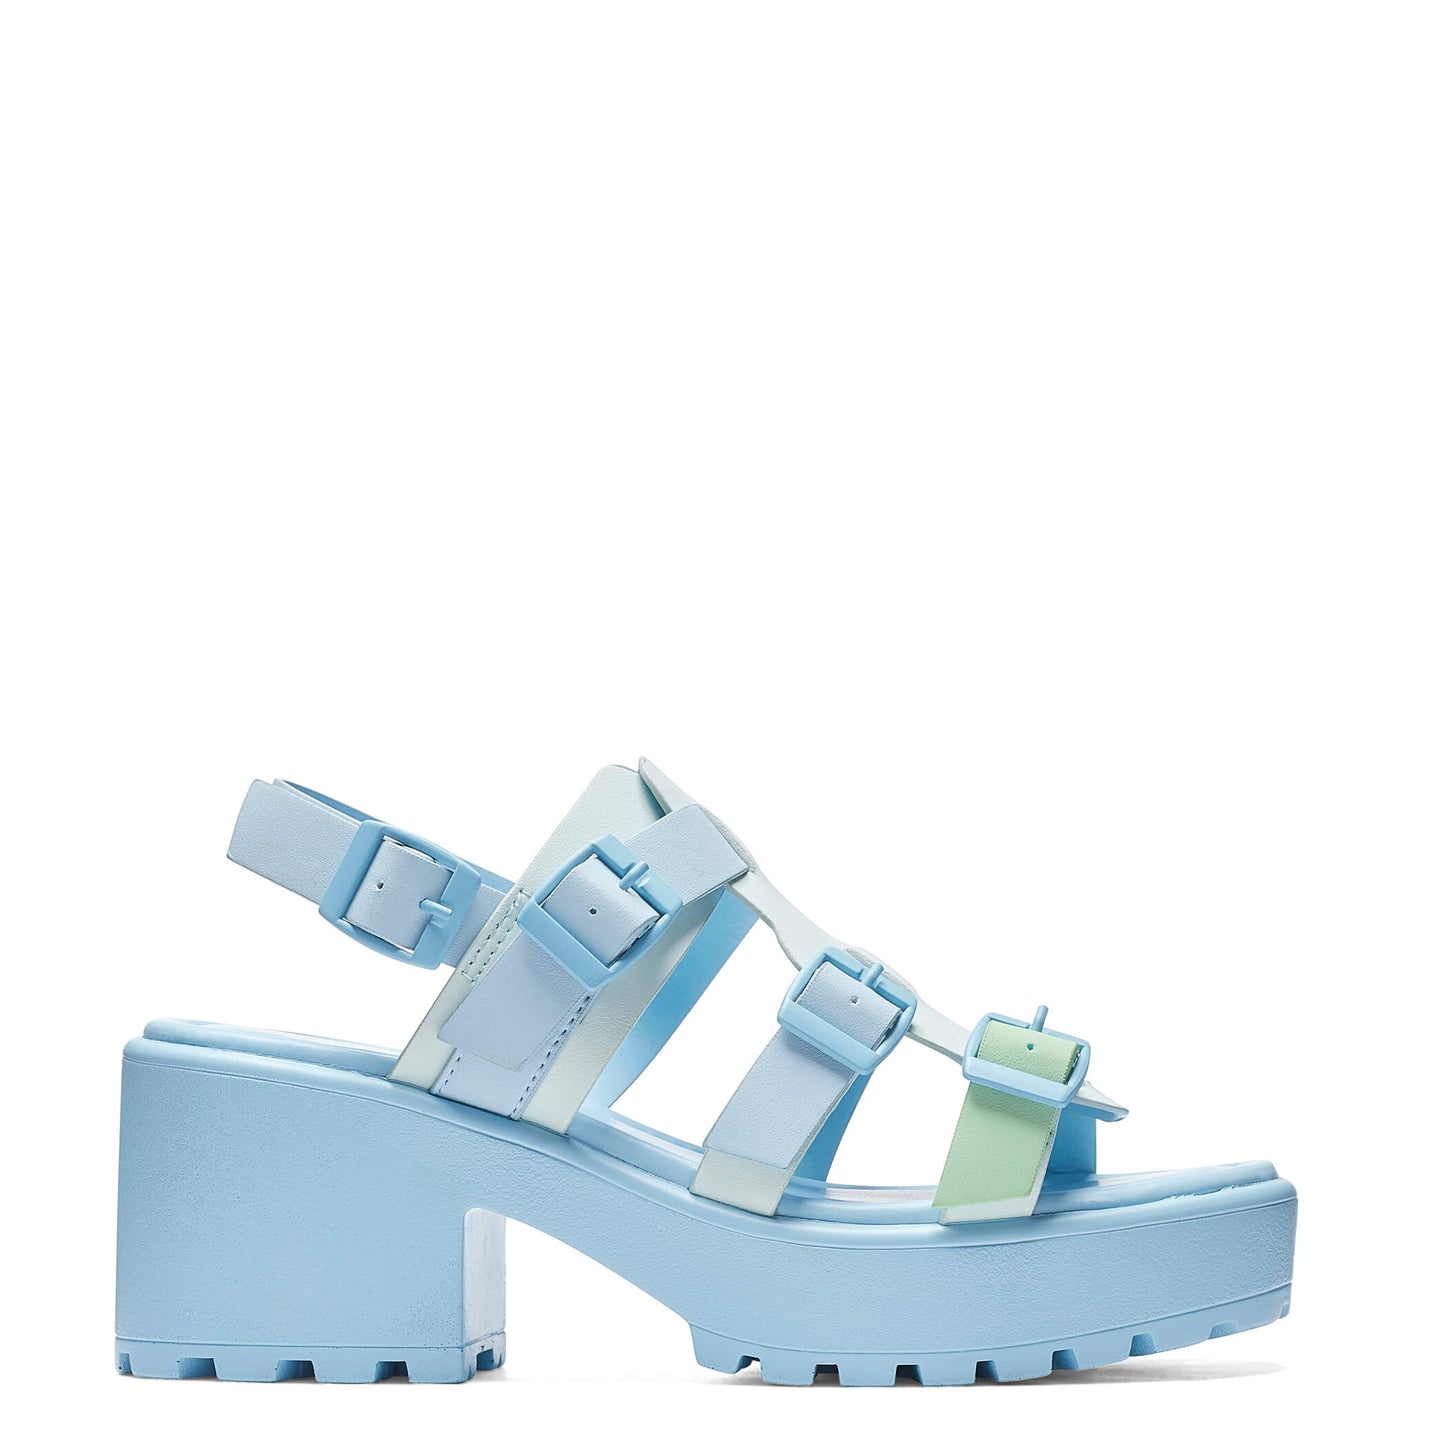 Sugar Season Chunky Buckle Sandals - Blue - Sandals - KOI Footwear - Blue - Side View